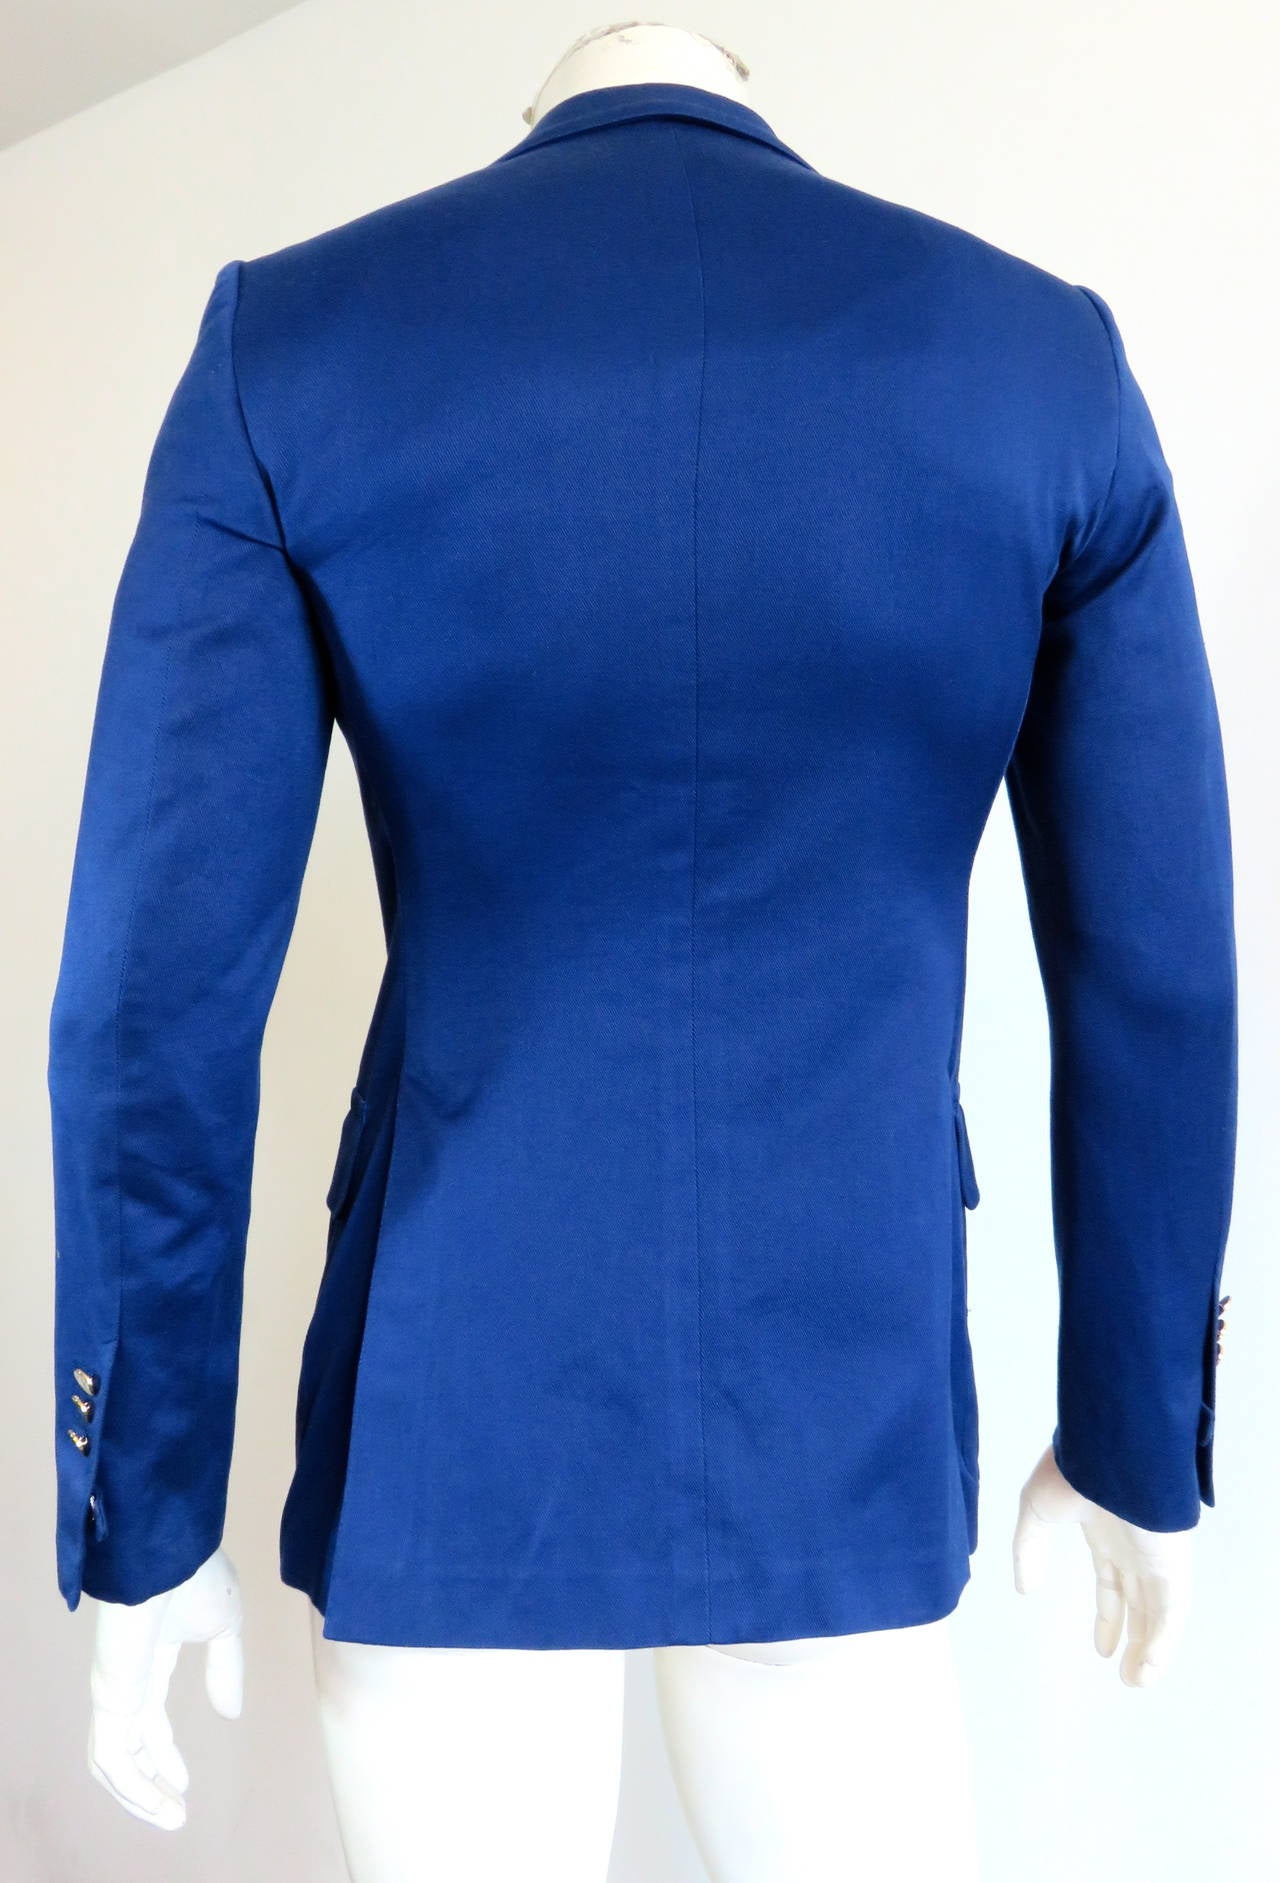 YVES SAINT LAURENT by Tom Ford Men's French blue twill blazer jacket 3